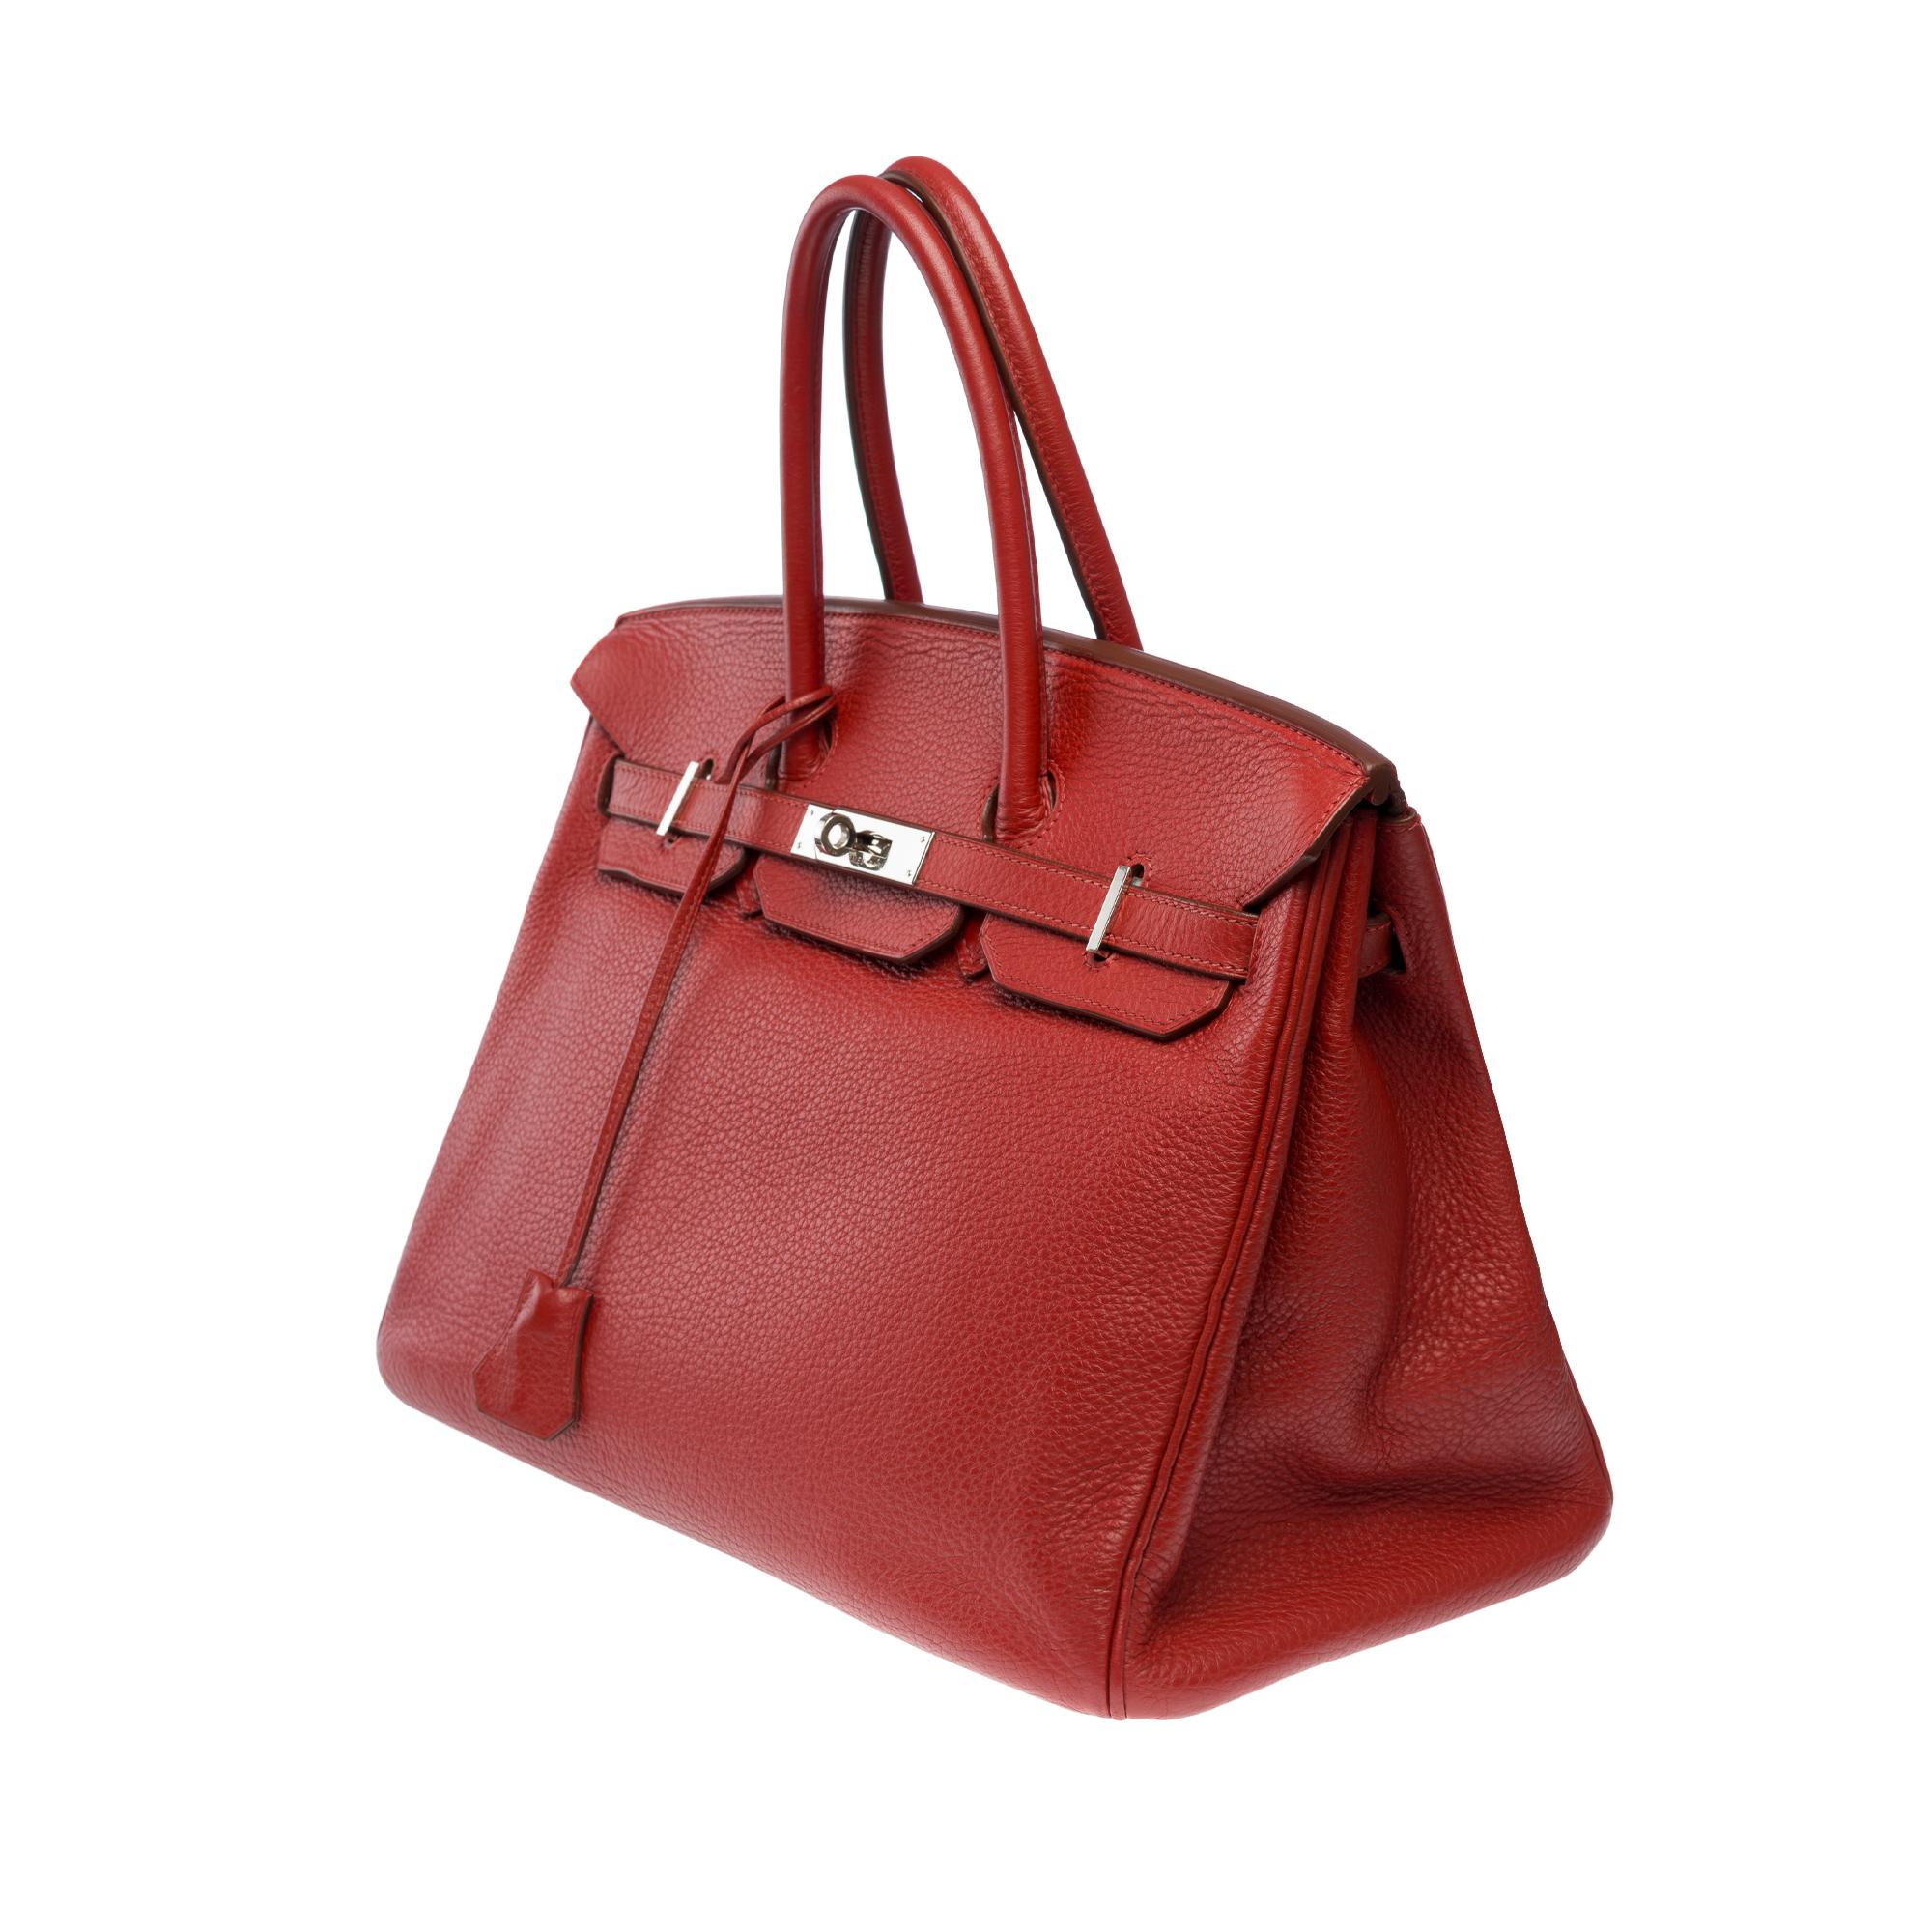 Stunning Hermès Birkin 35 handbag in Sienne Togo leather, SHW For Sale 2